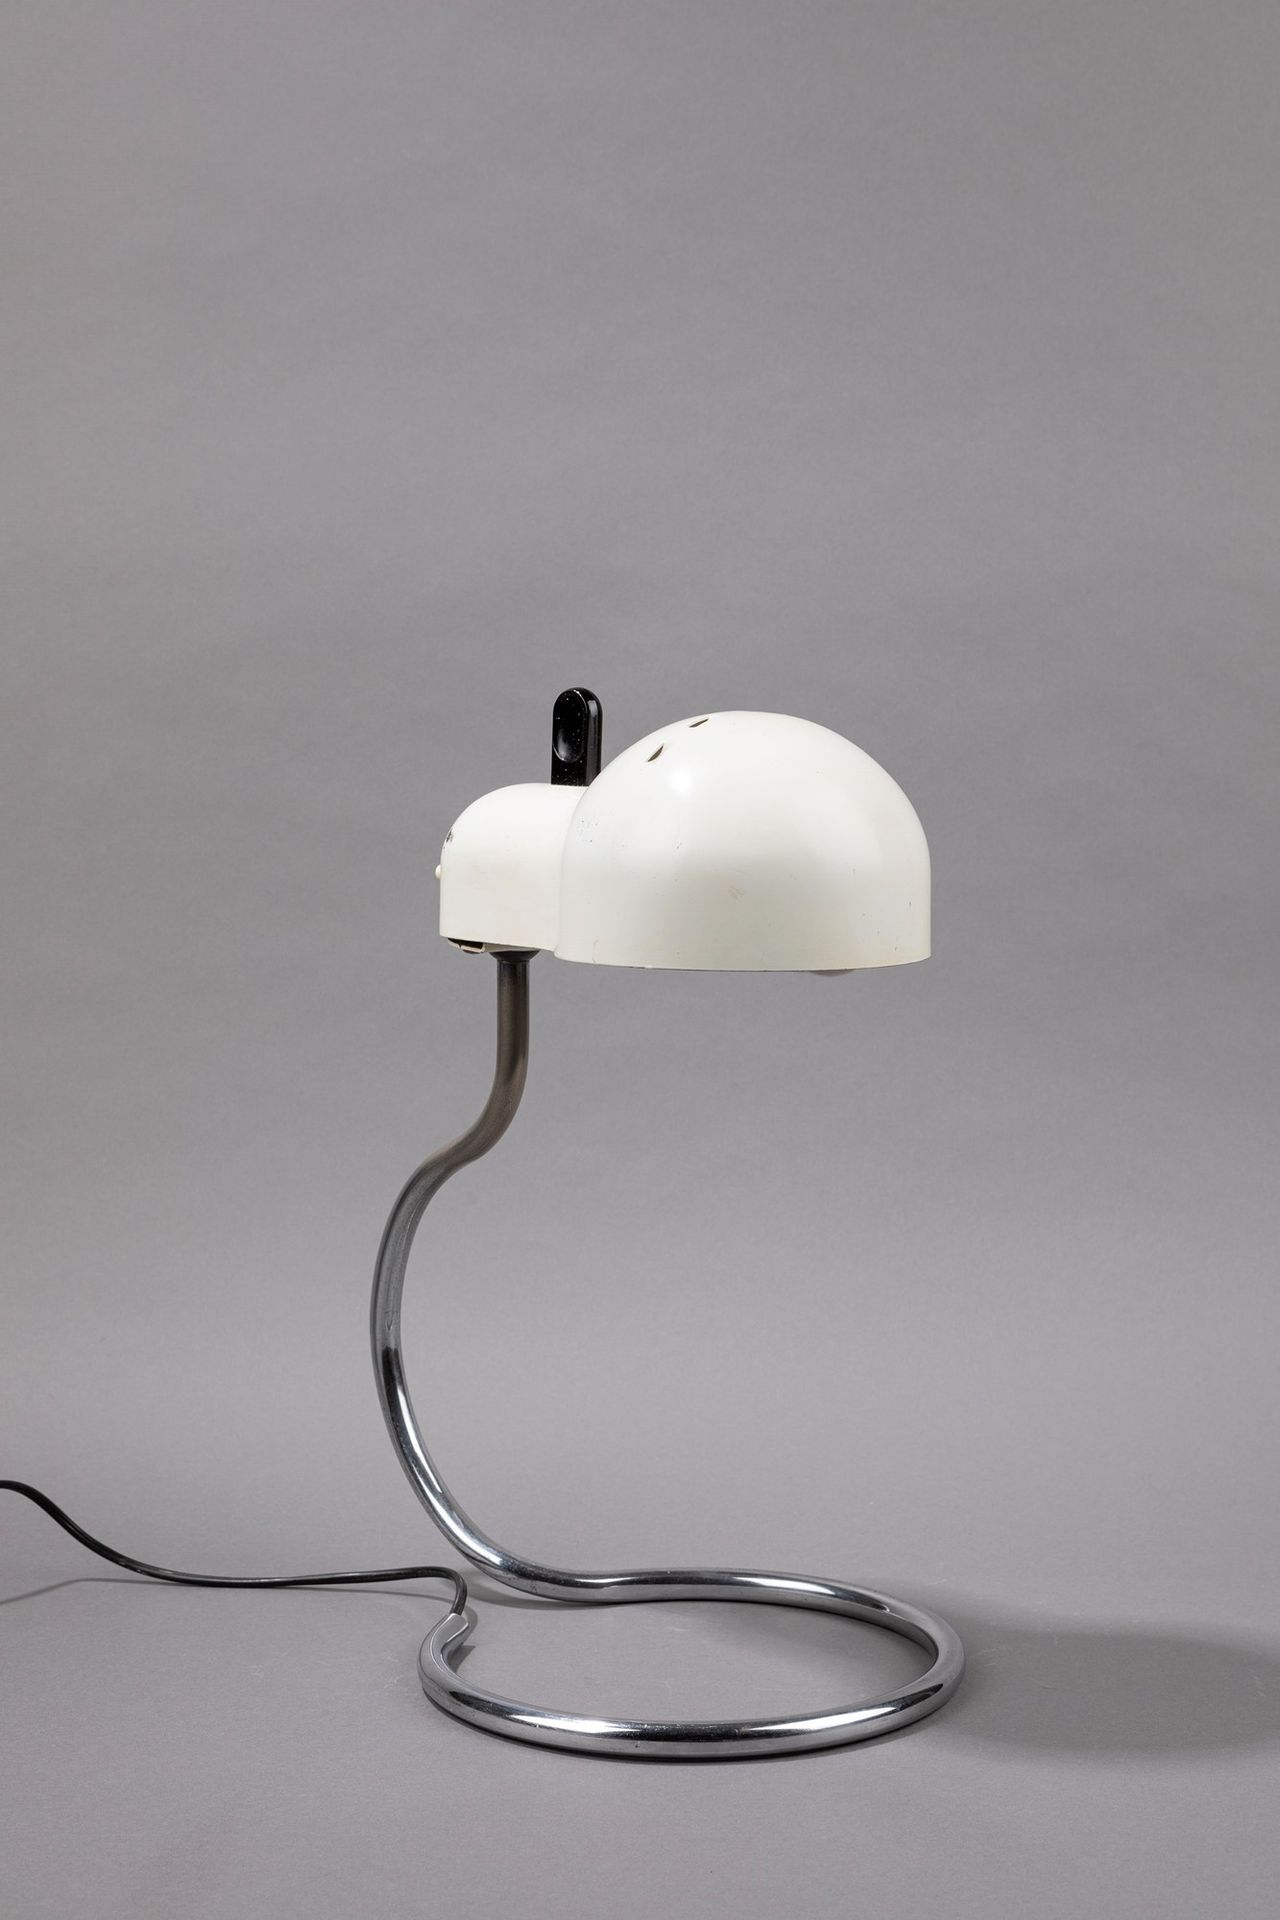 Joe Colombo Mini Topo, 1970

h 36 x diam 20 cm
可调节的台灯。经清漆处理的白色金属。Stilnovo制造。